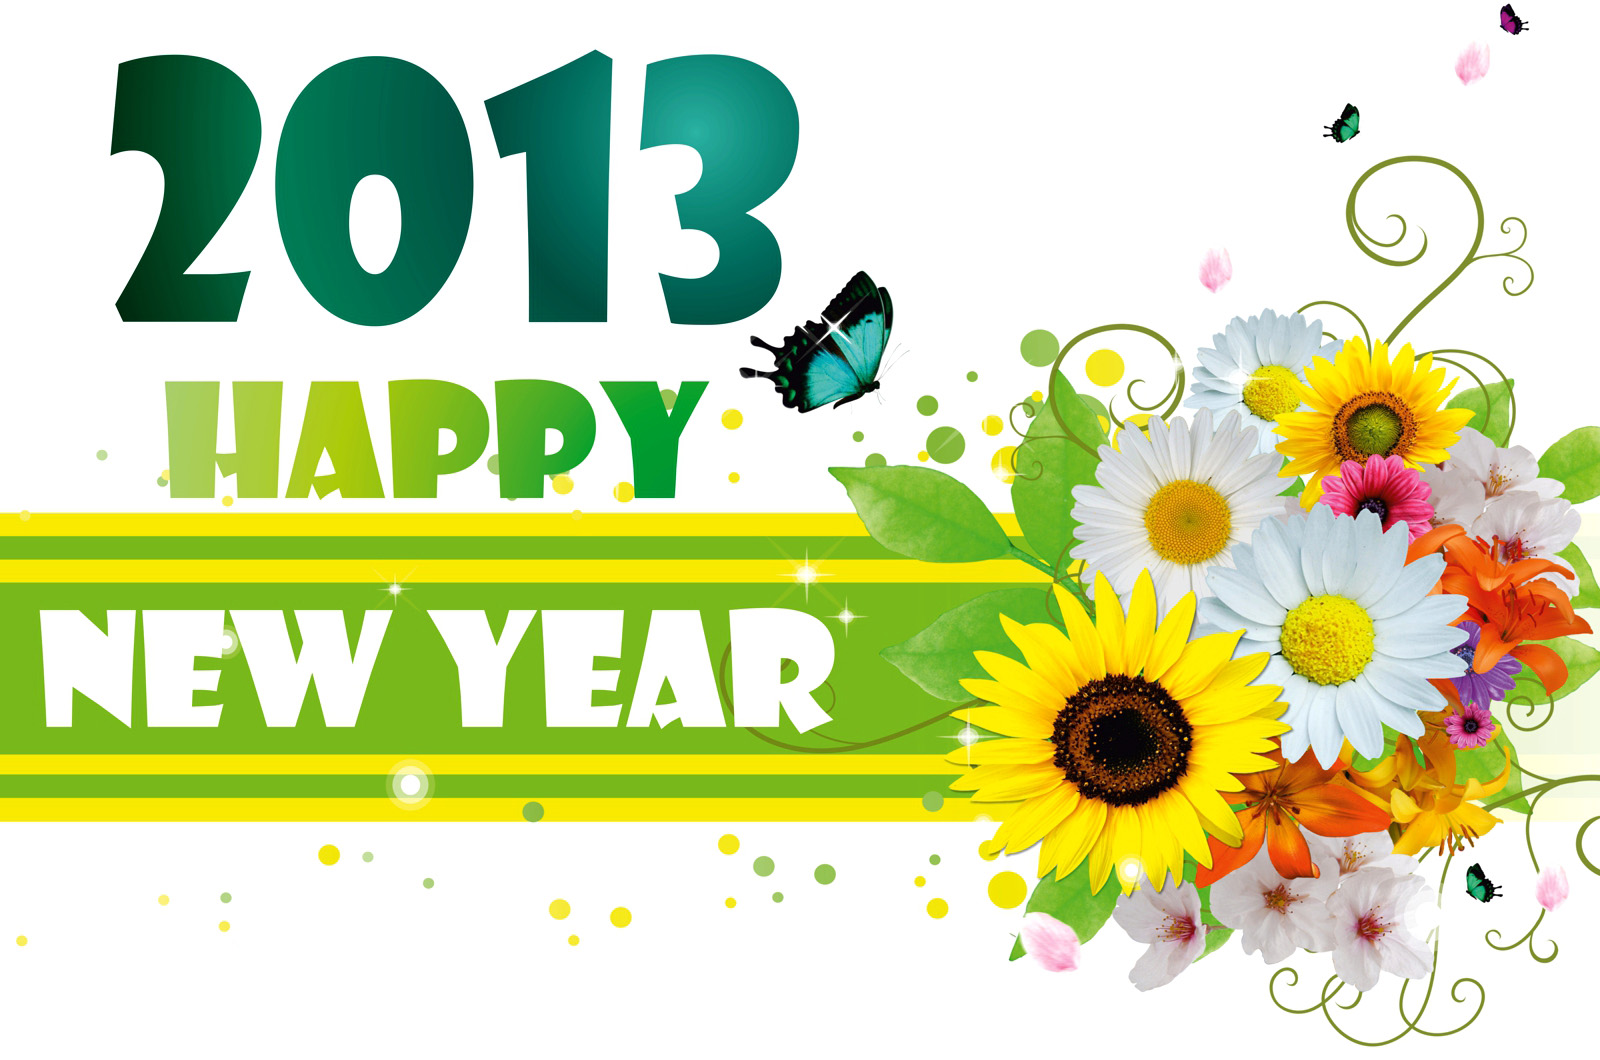 http://2.bp.blogspot.com/-_74PXVUy_-s/UMYqie7YuyI/AAAAAAAAAh8/CLqFWu-eRM8/s1600/Happy+New+Year+2013+Full+HD+Wallpaper+%25284%2529.jpg